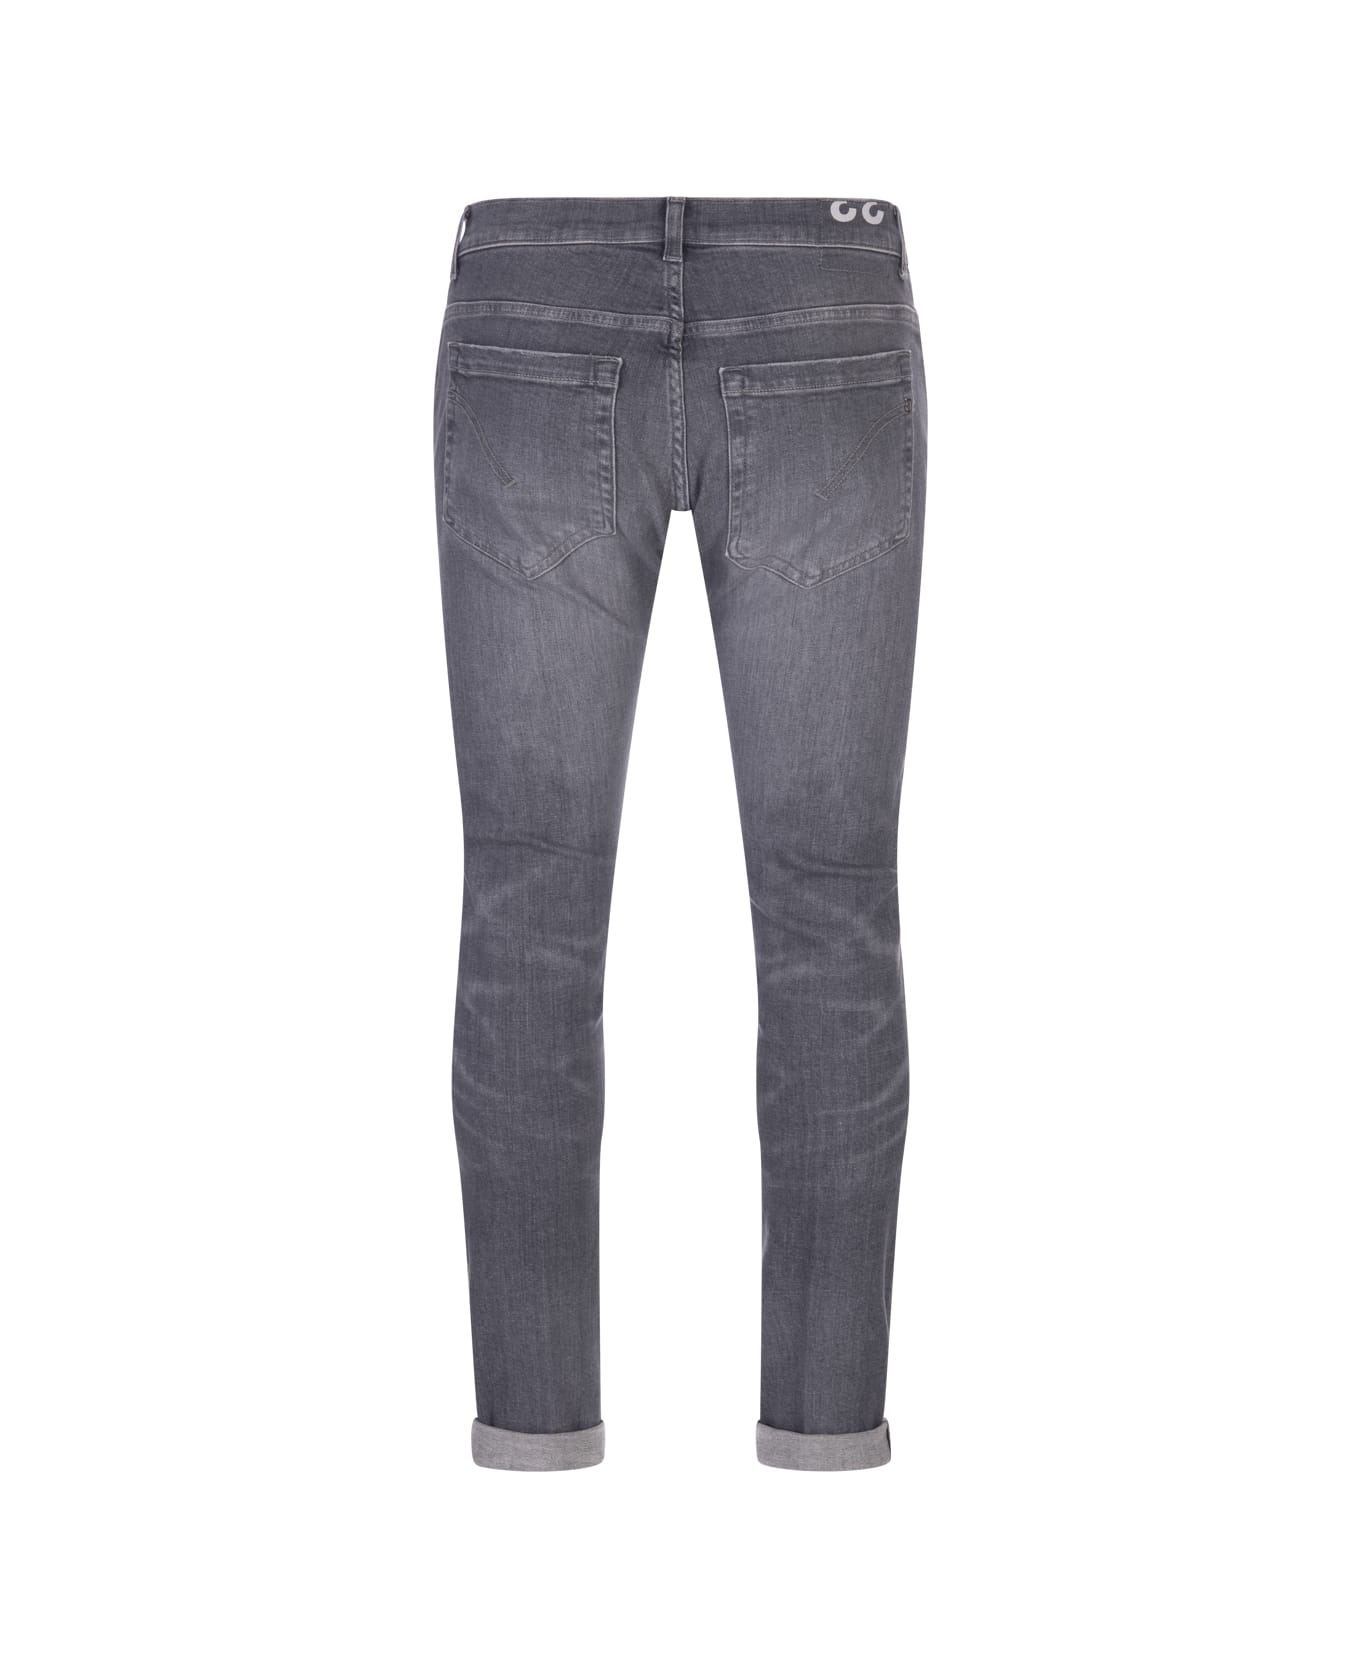 Dondup George Skinny Fit Jeans In Grey Stretch Denim - Grey